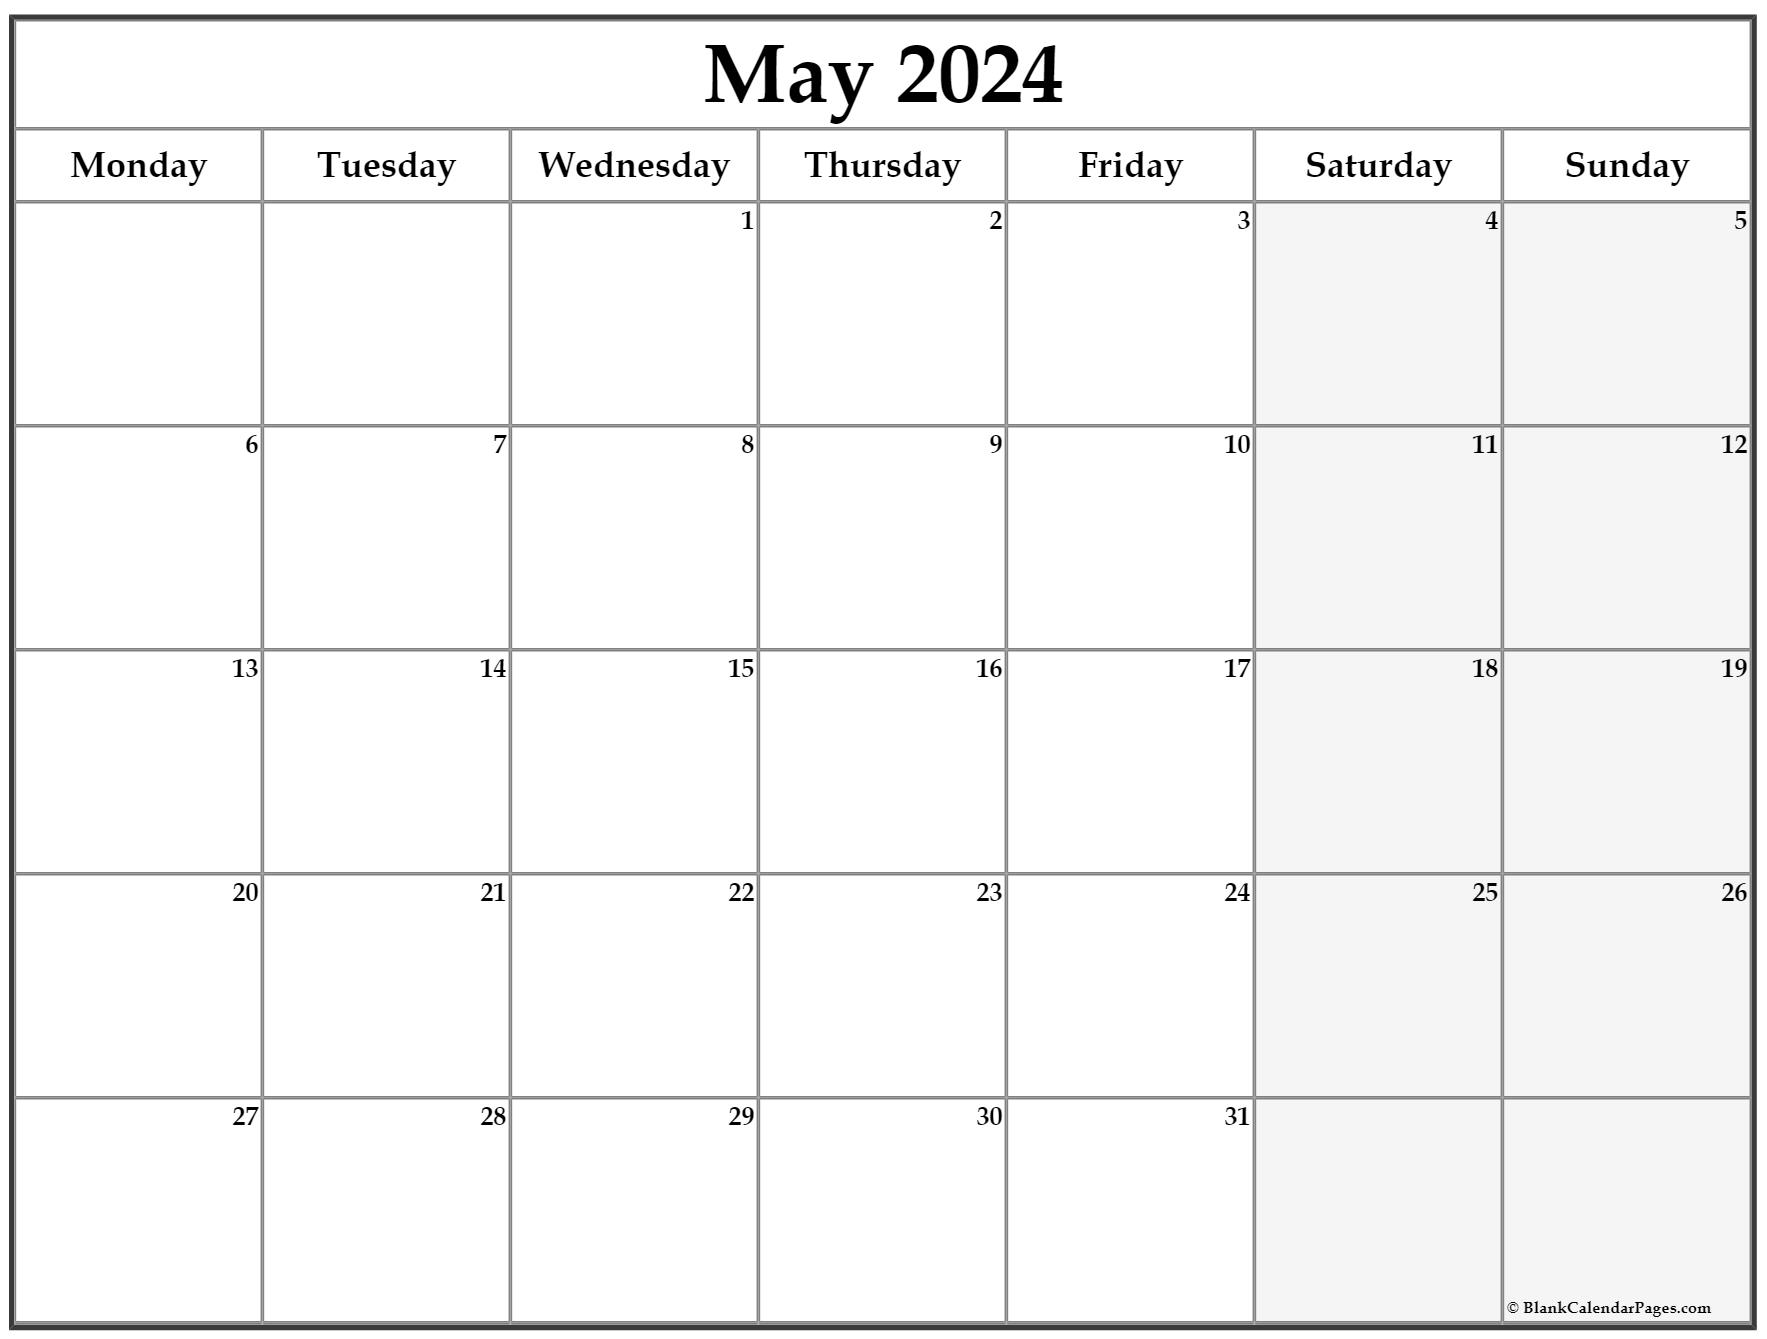 May 2021 Monday Calendar | Monday to Sunday